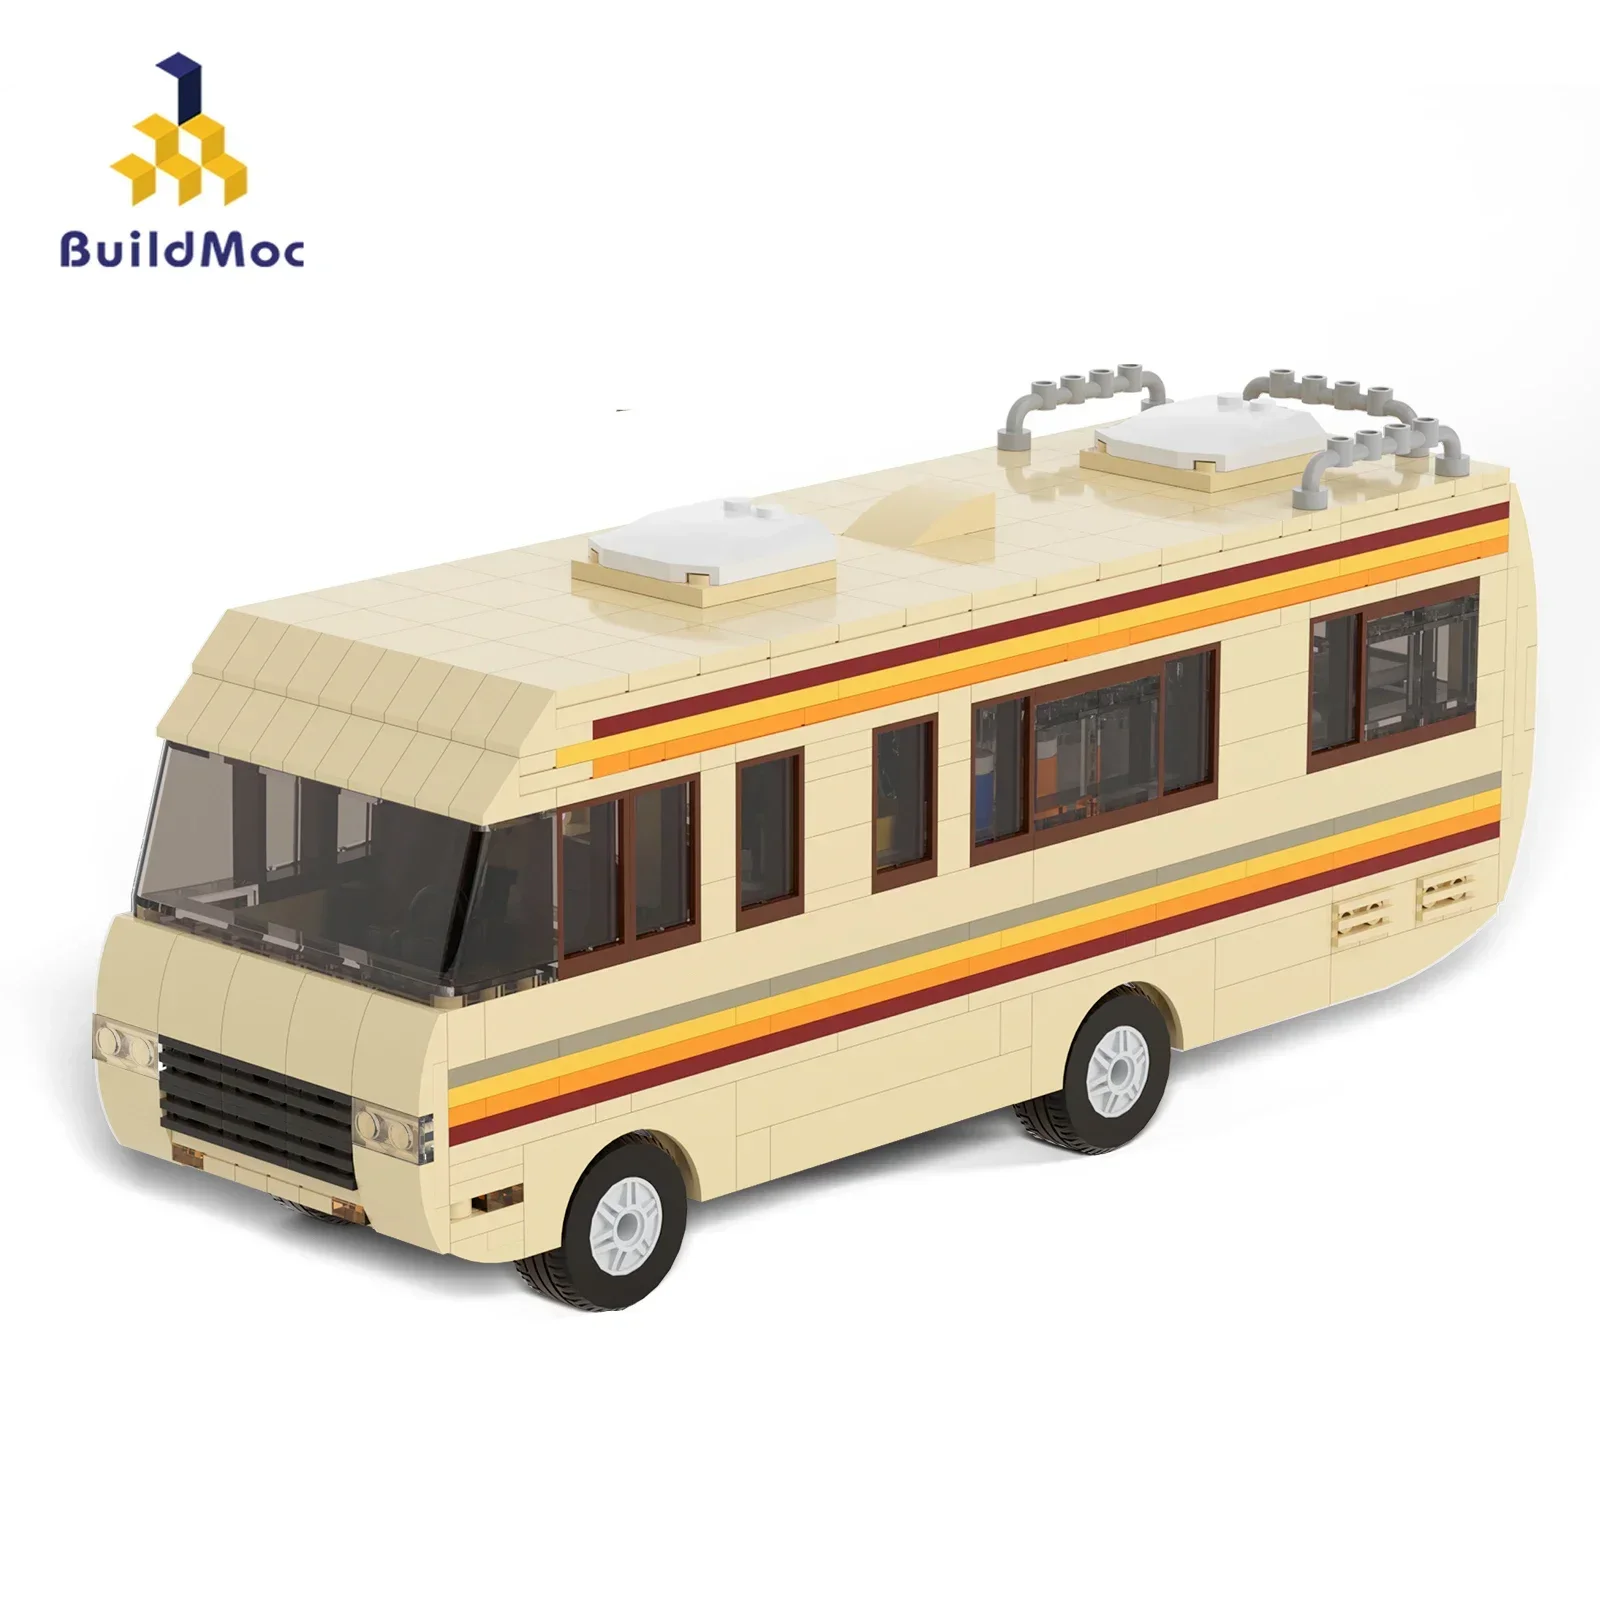 

BuildMoc New Breaking Bad Pinkman Cooking Lab RV Car Building Blocks Set Walter White Van Vehicle Toy For Children Birthday Gift